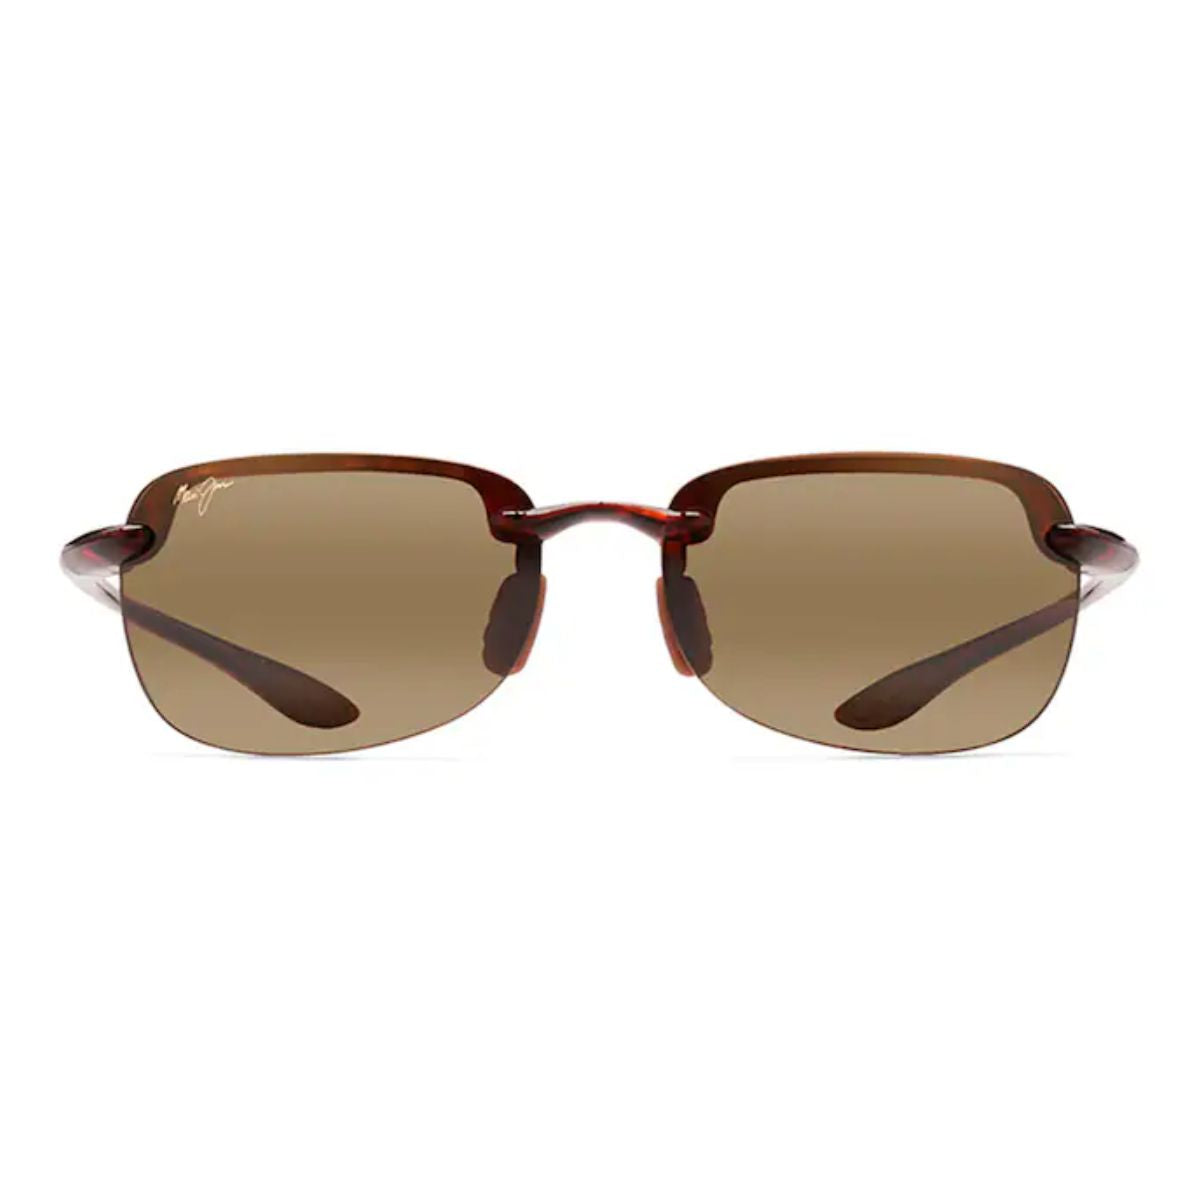 "Shop Latest Maui Jim Sandy Beach MJ 408N 10 Polarized Sunglasses For Mens's At Online Optorium"